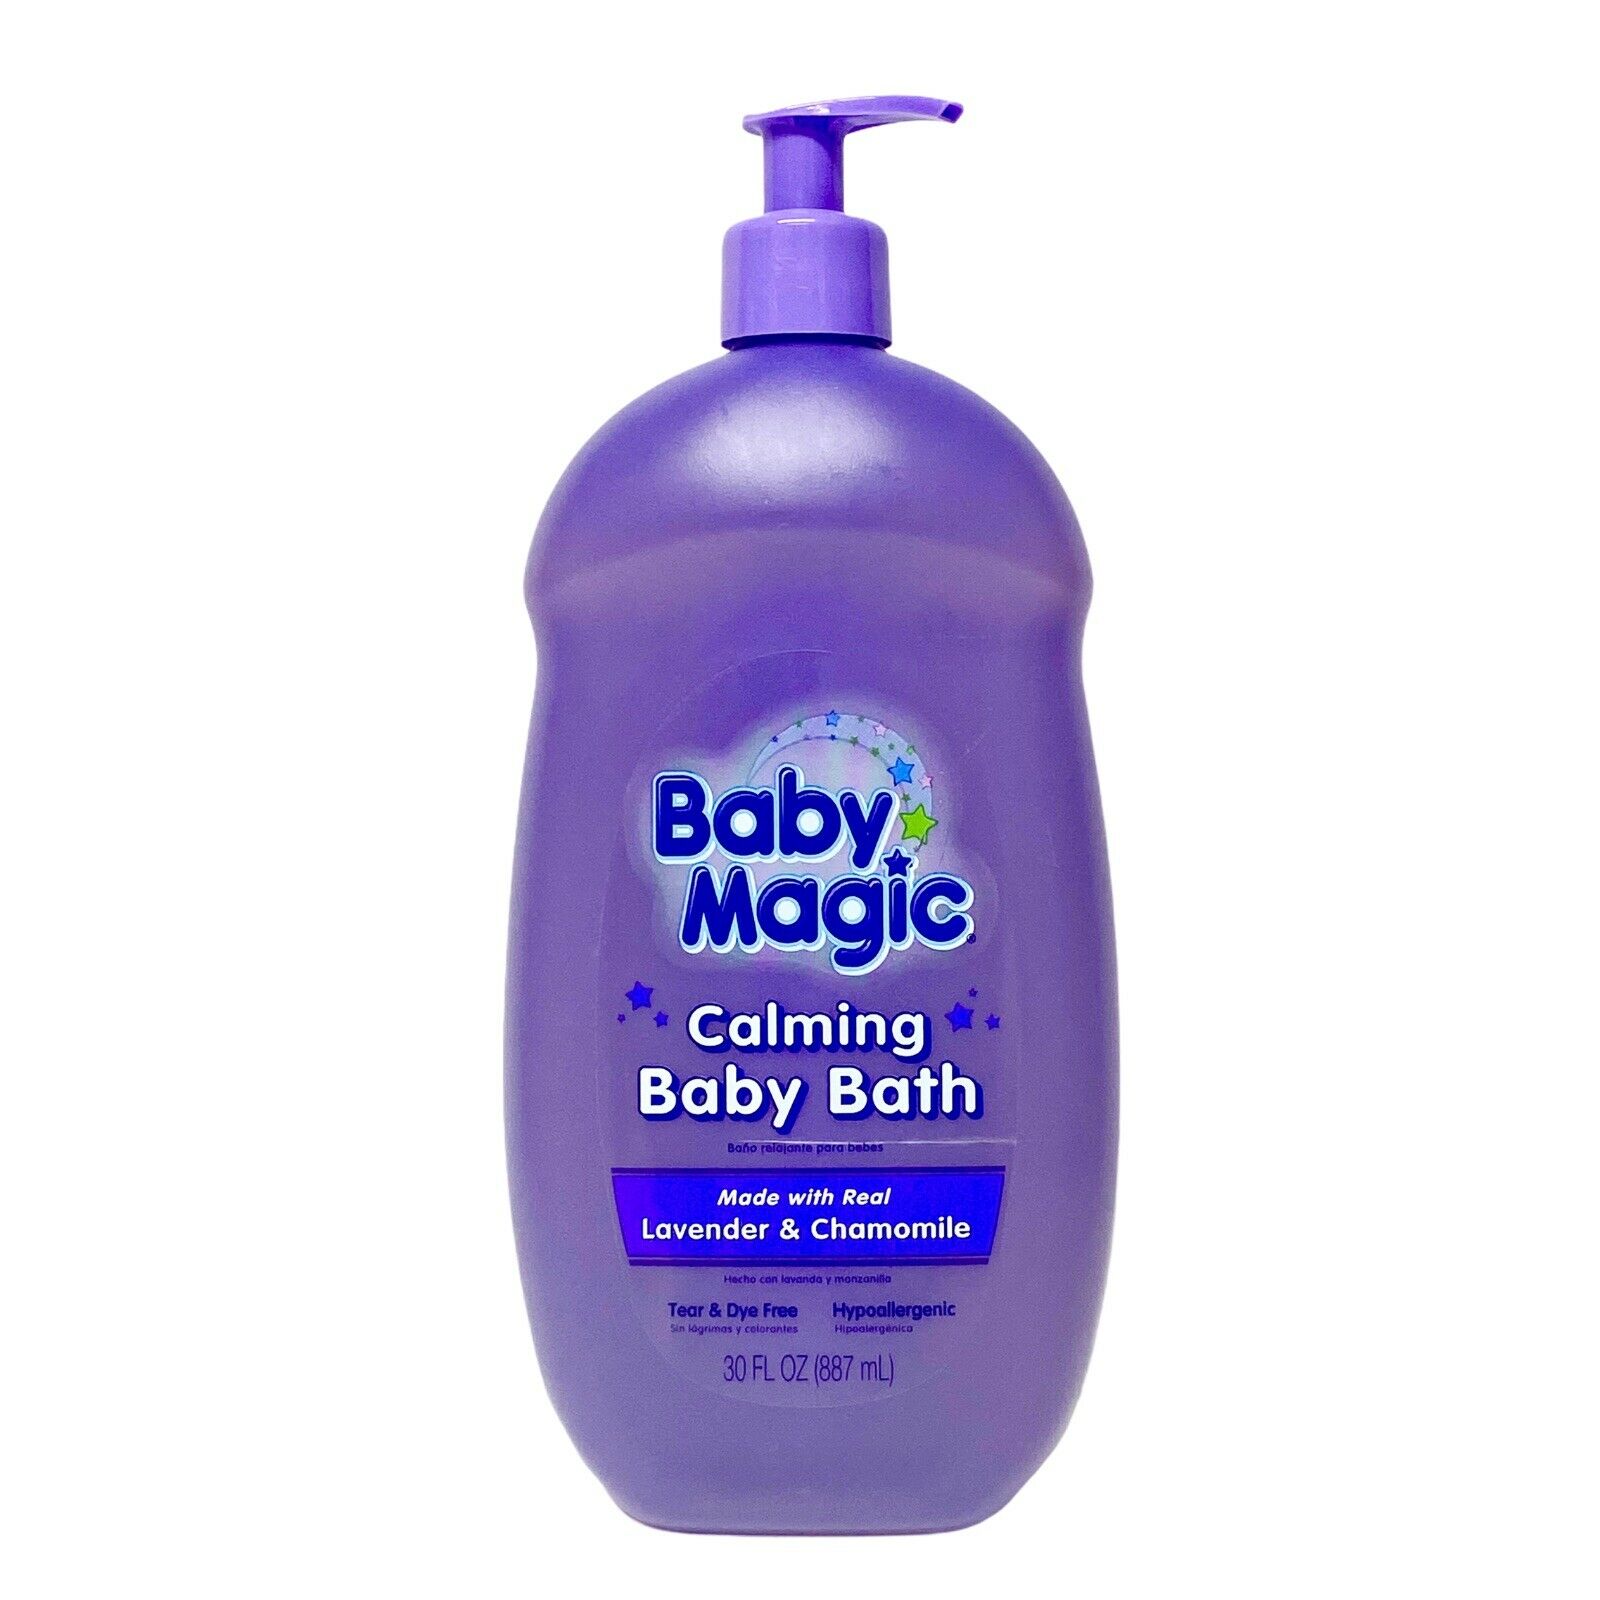 Baby Magic Calming Baby Bath, Lavender and Chamomile, Hugh 30oz Bottle